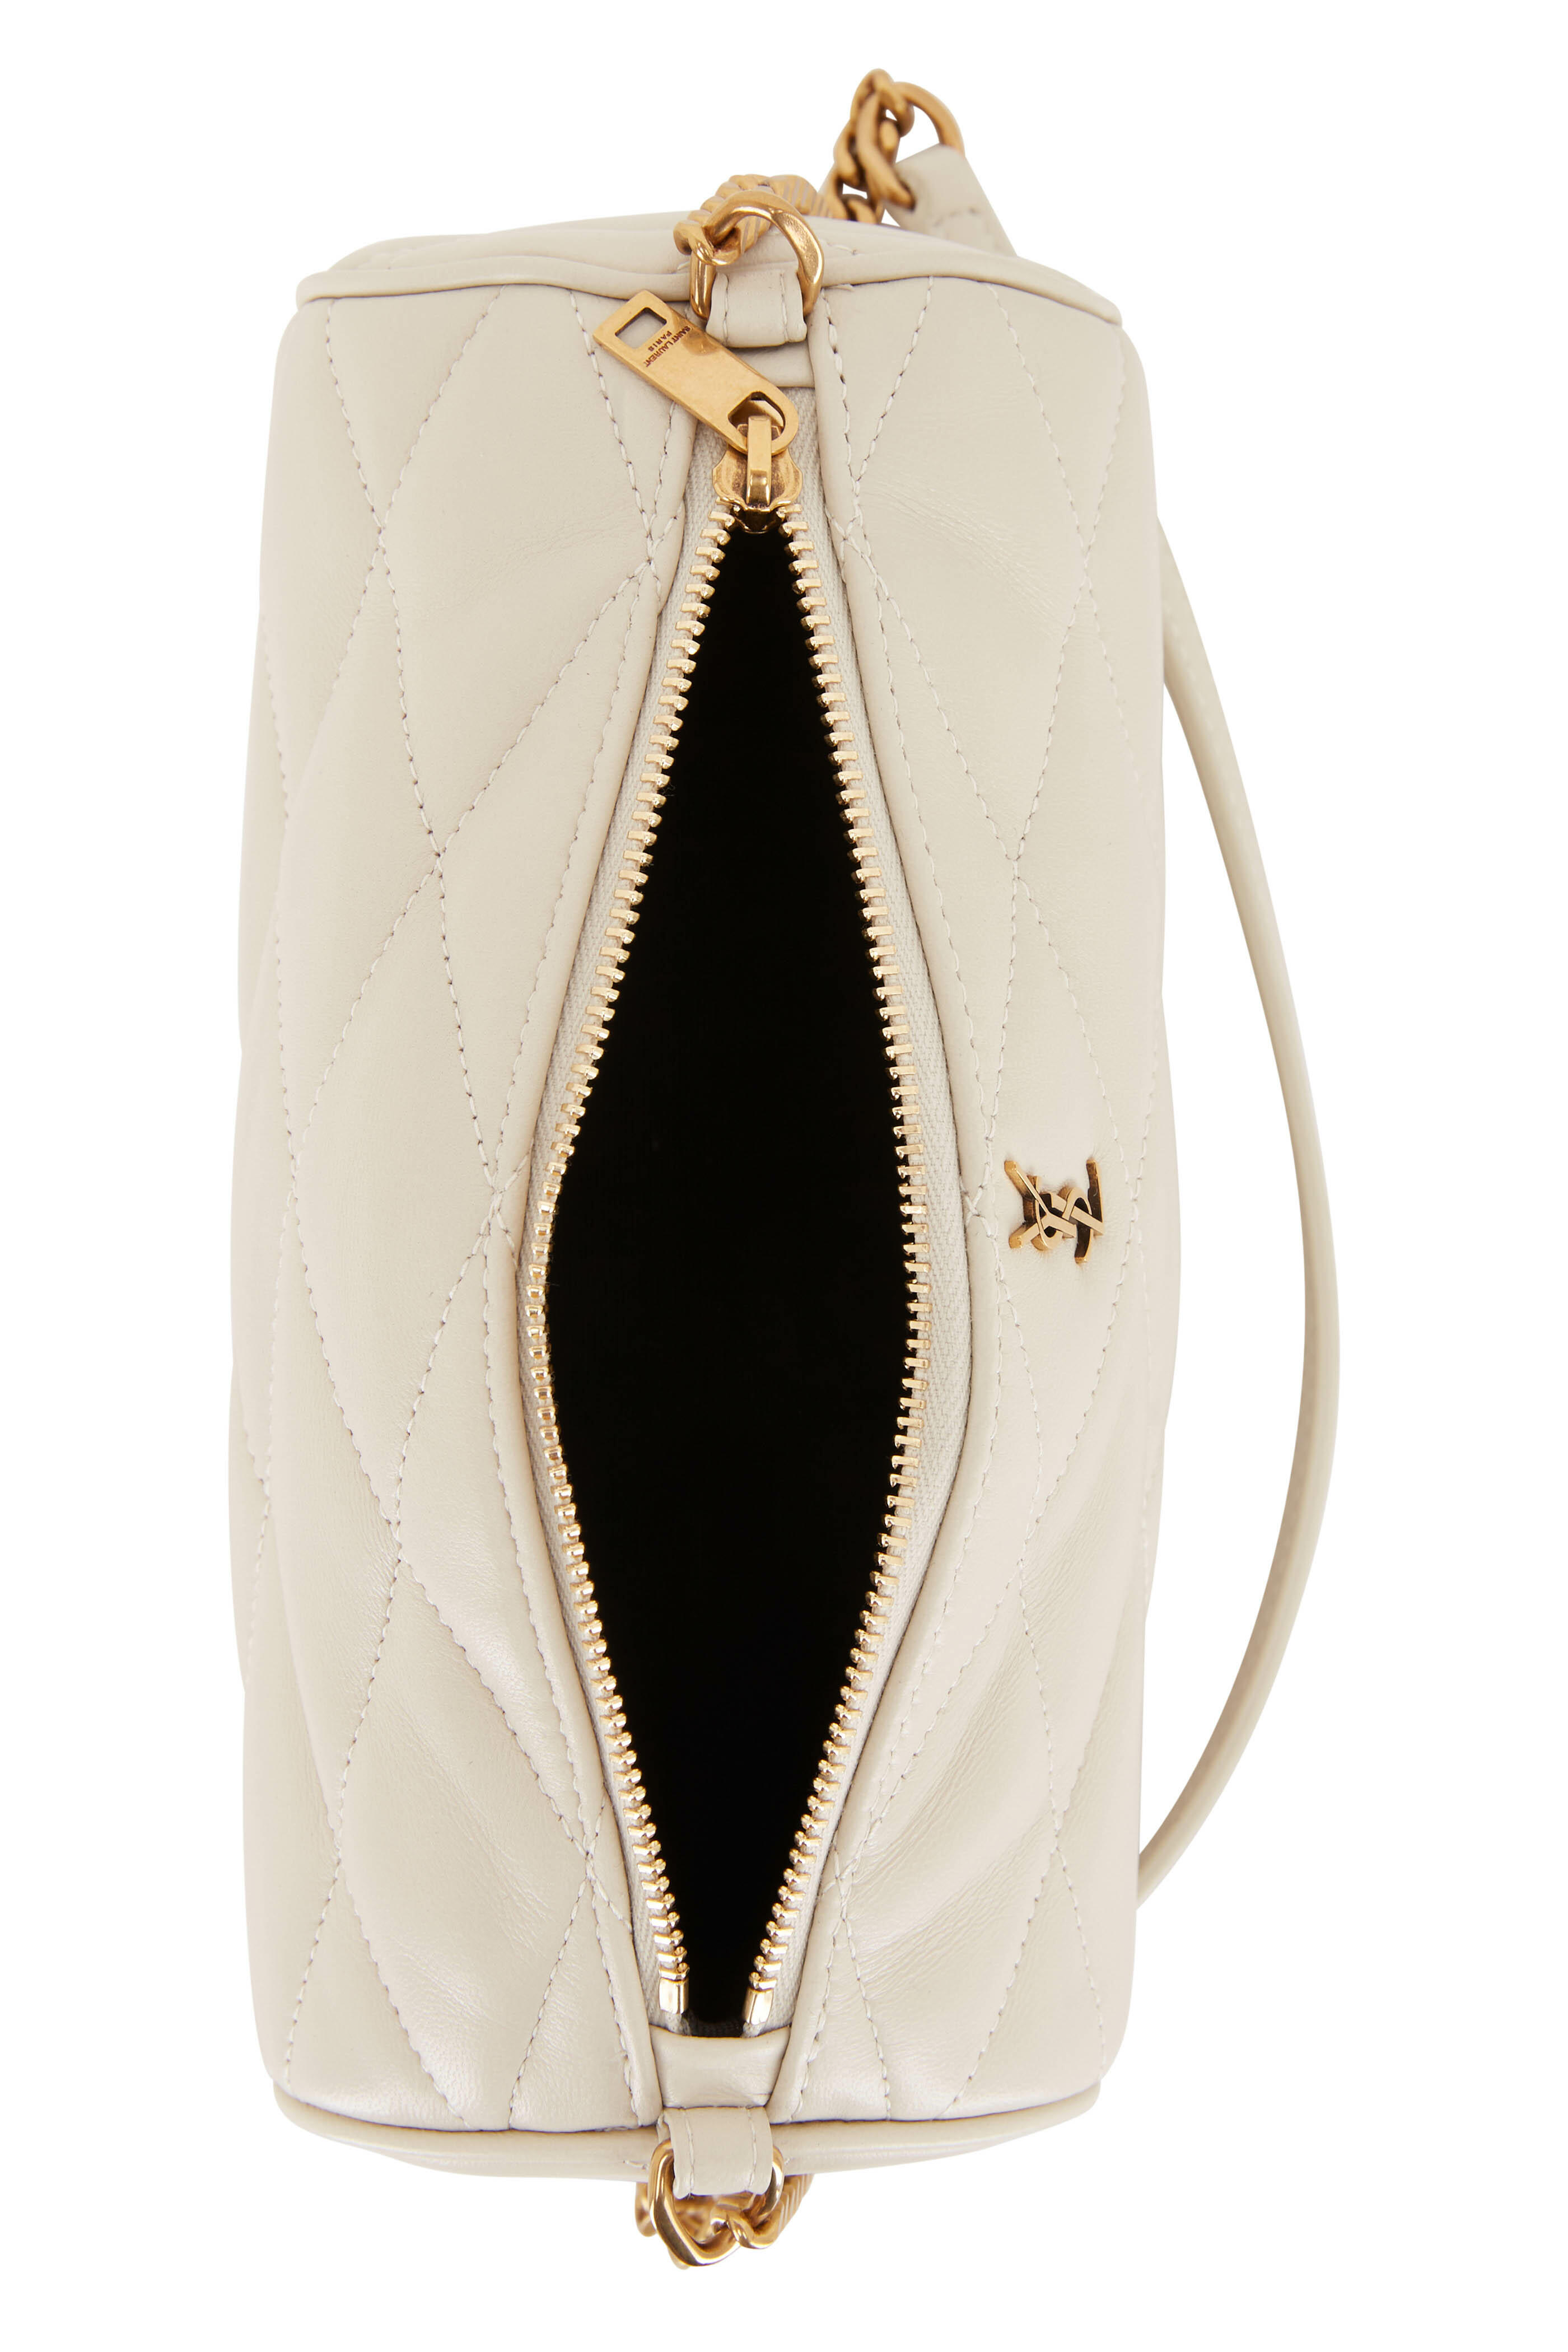 Saint Laurent Sade Quilted Leather Shoulder Bag - Cream - One Size